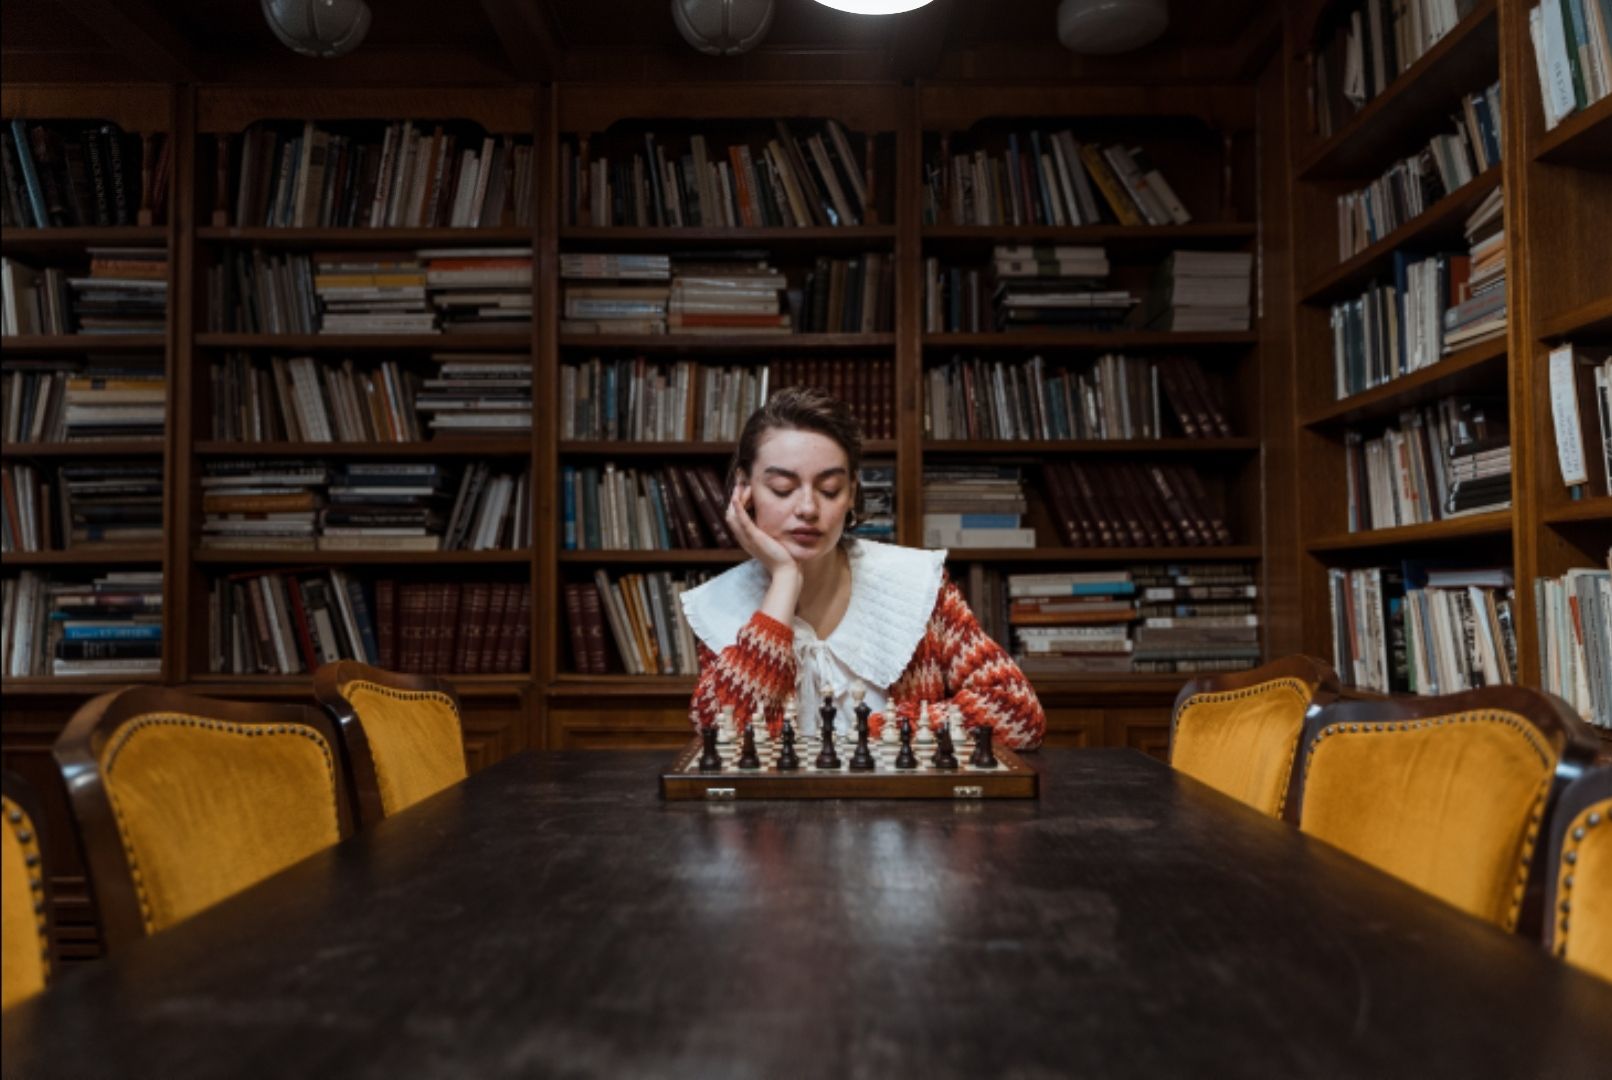 Photo by Tima Miroshnichenko: https://www.pexels.com/photo/pensive-woman-playing-chess-10626503/